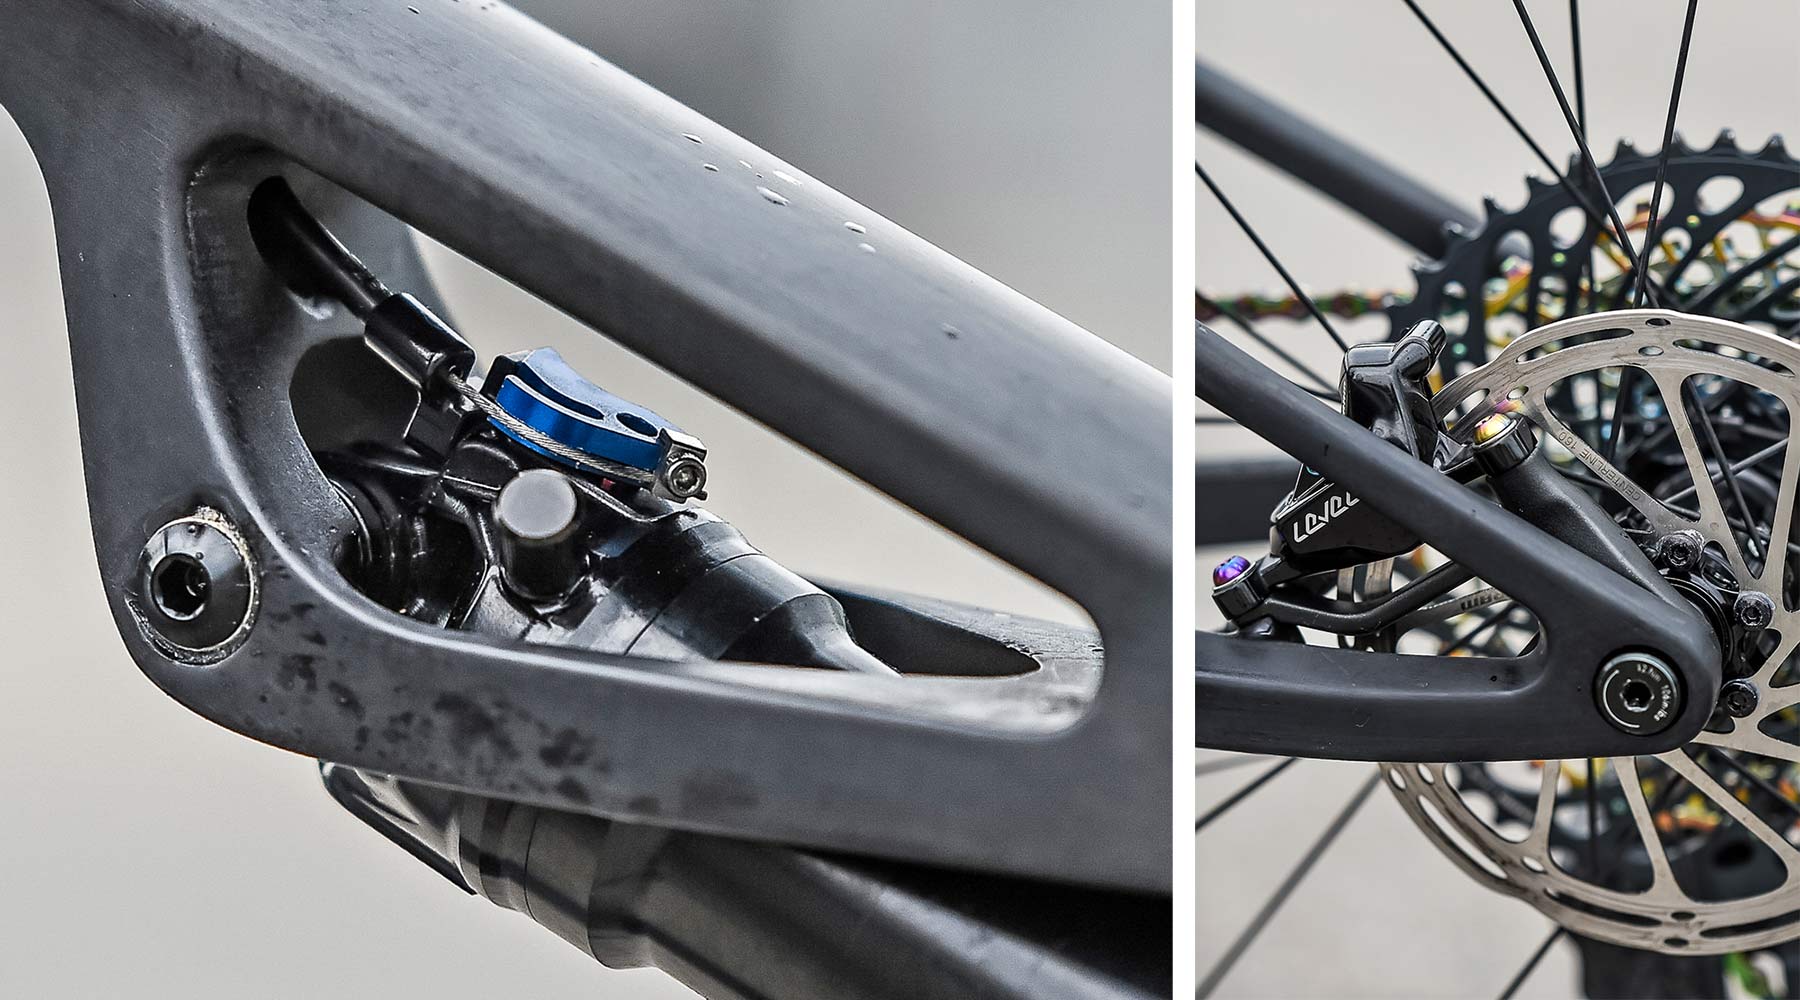 2021 MMR Kenta 29 prototype XC race bike, 100mm full-suspension carbon cross-country mountain bike frame details